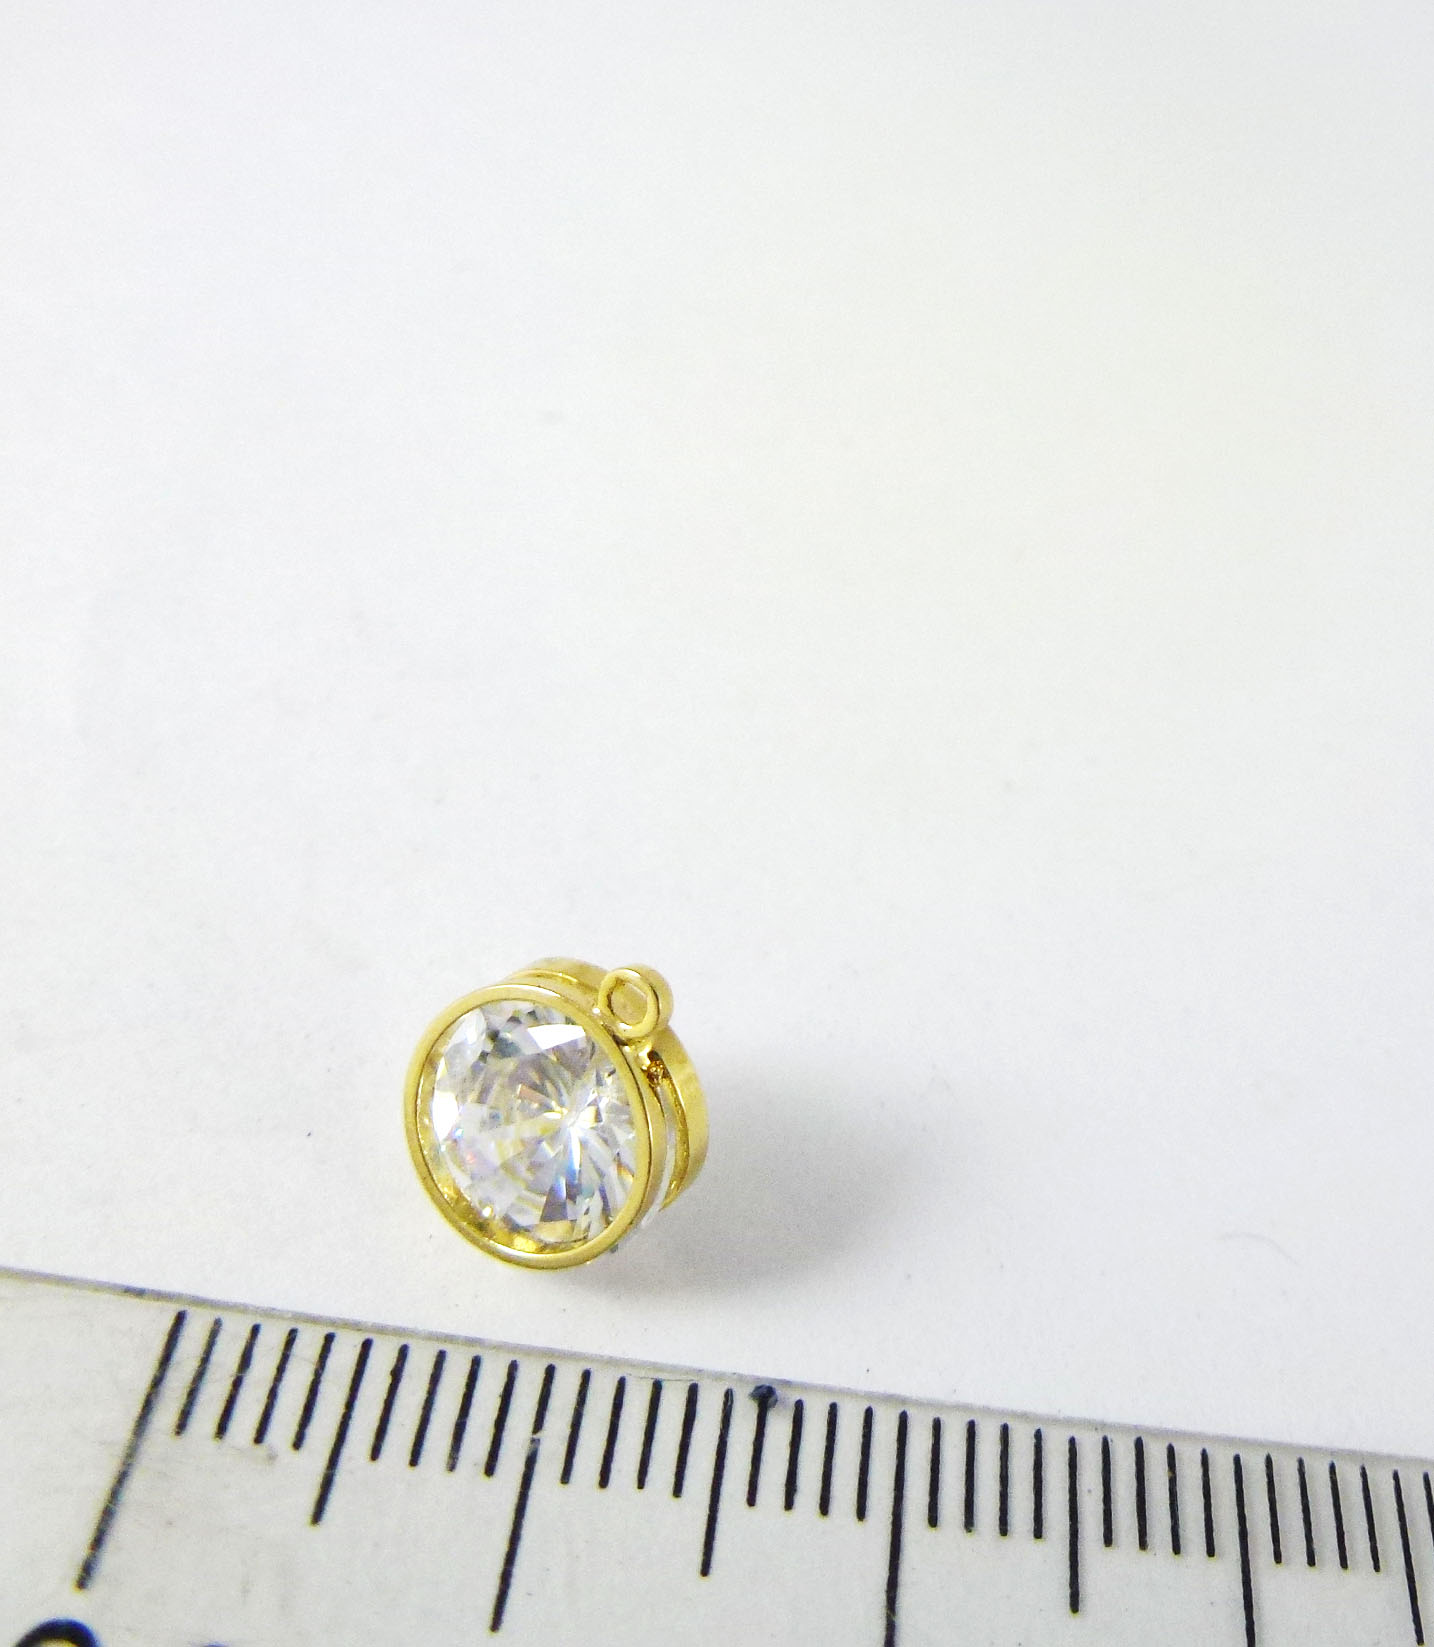 8mm銅鍍金色單孔圓形鋯石